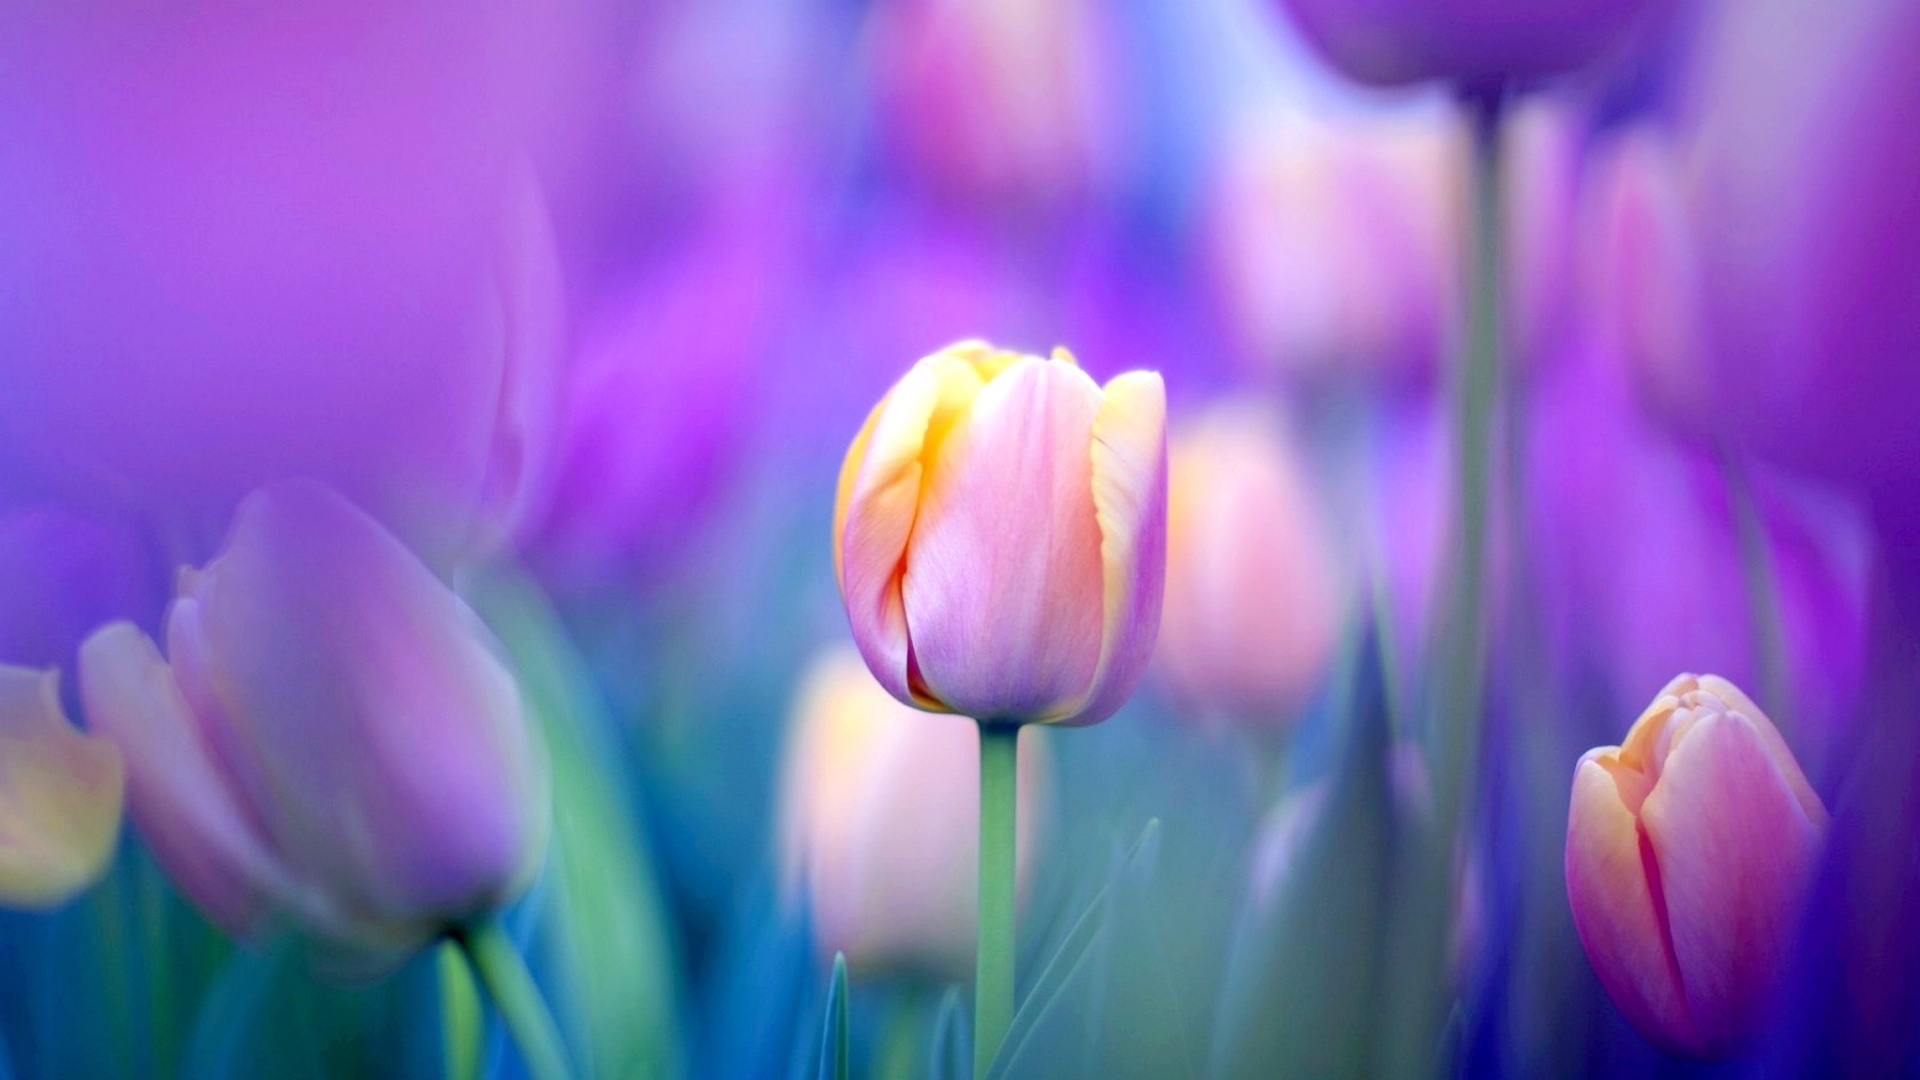 10 Tulips Flower Wallpaper For Your Desktop Background - InspirationSeek.com